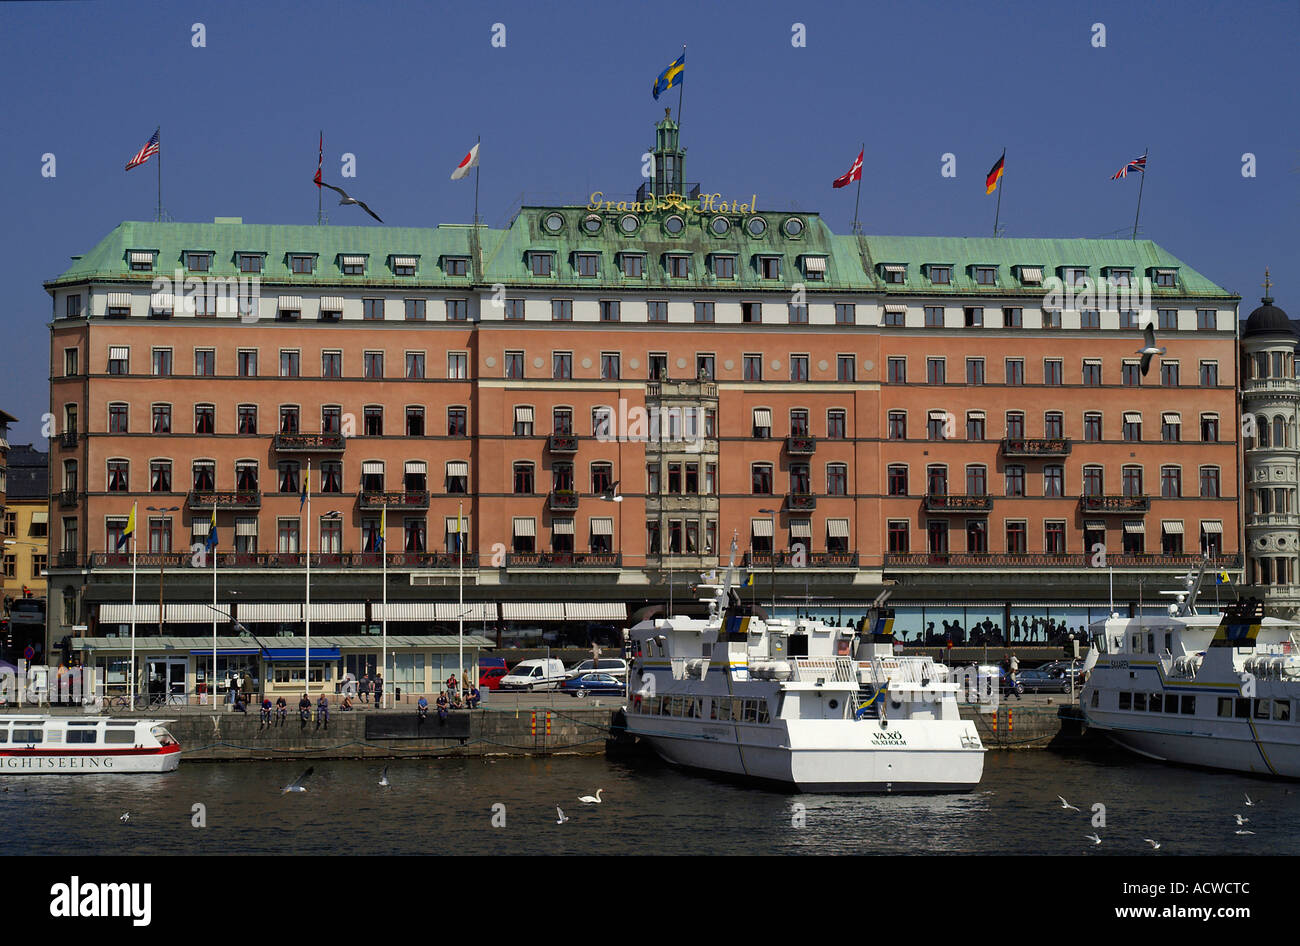 Grand Hotel in Stockholm, Sweden. Stock Photo